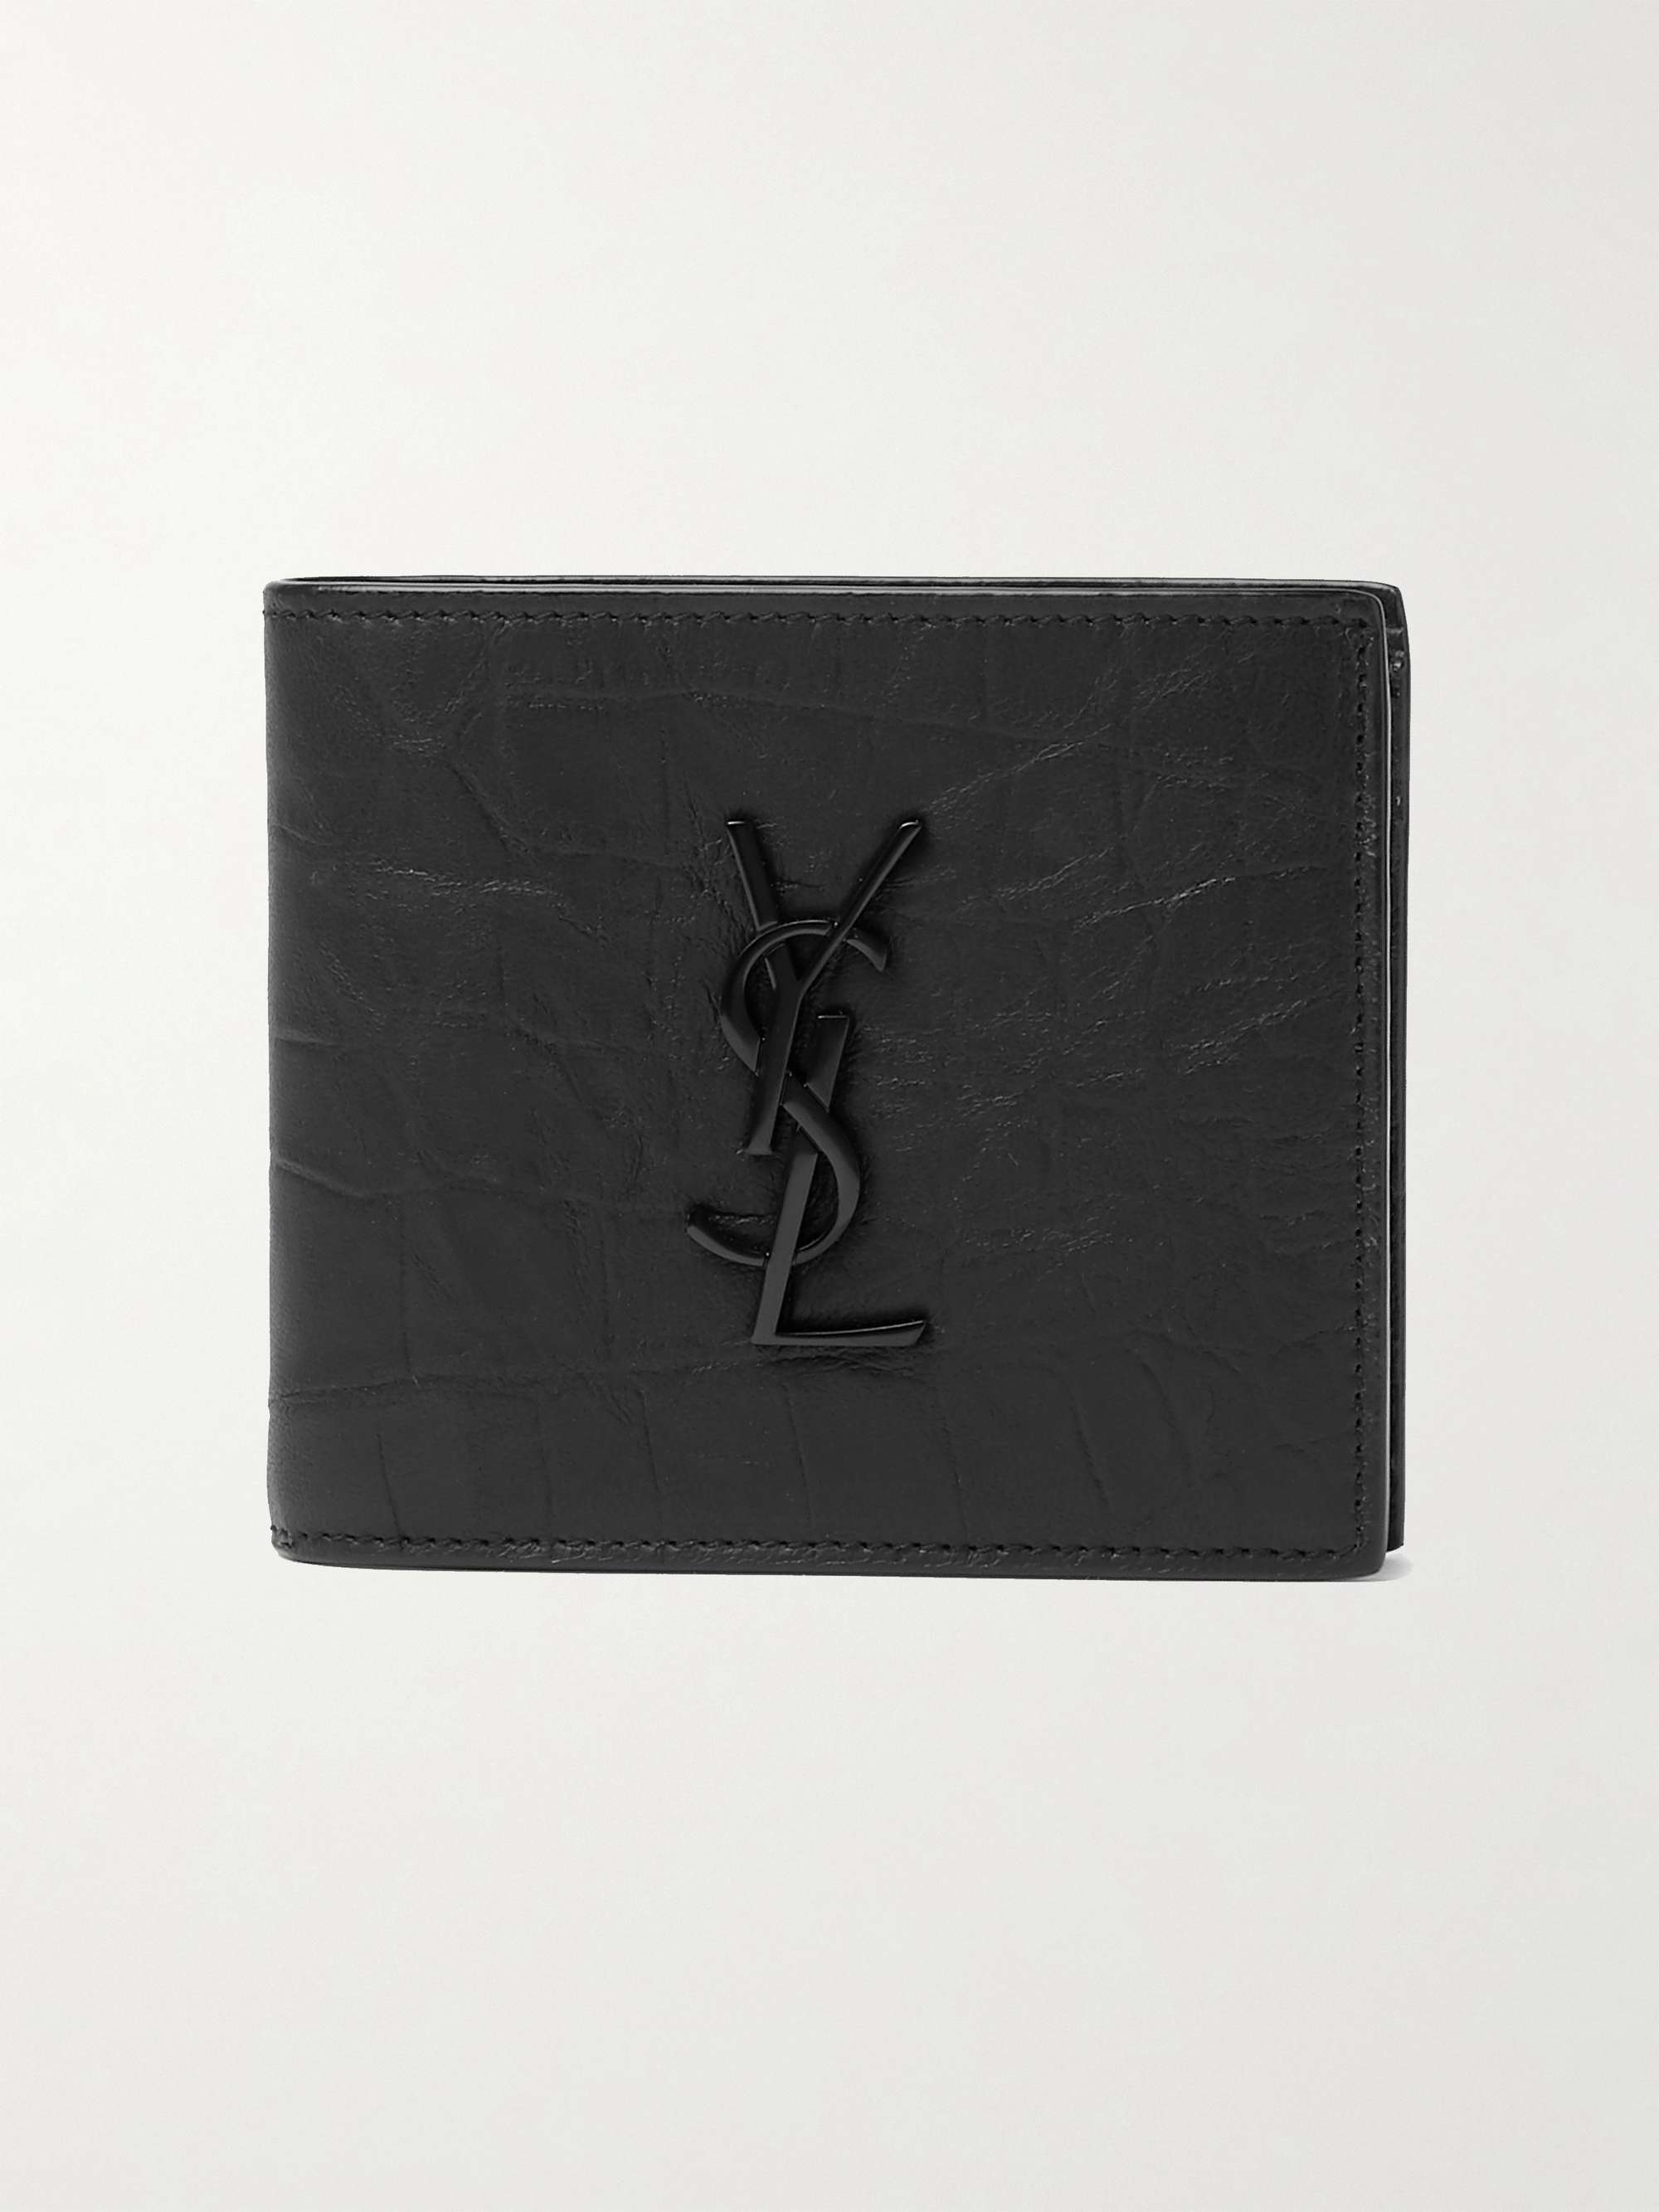 SAINT LAURENT, Logo-Appliquéd Croc-Effect Leather Billfold Wallet, Men, Black